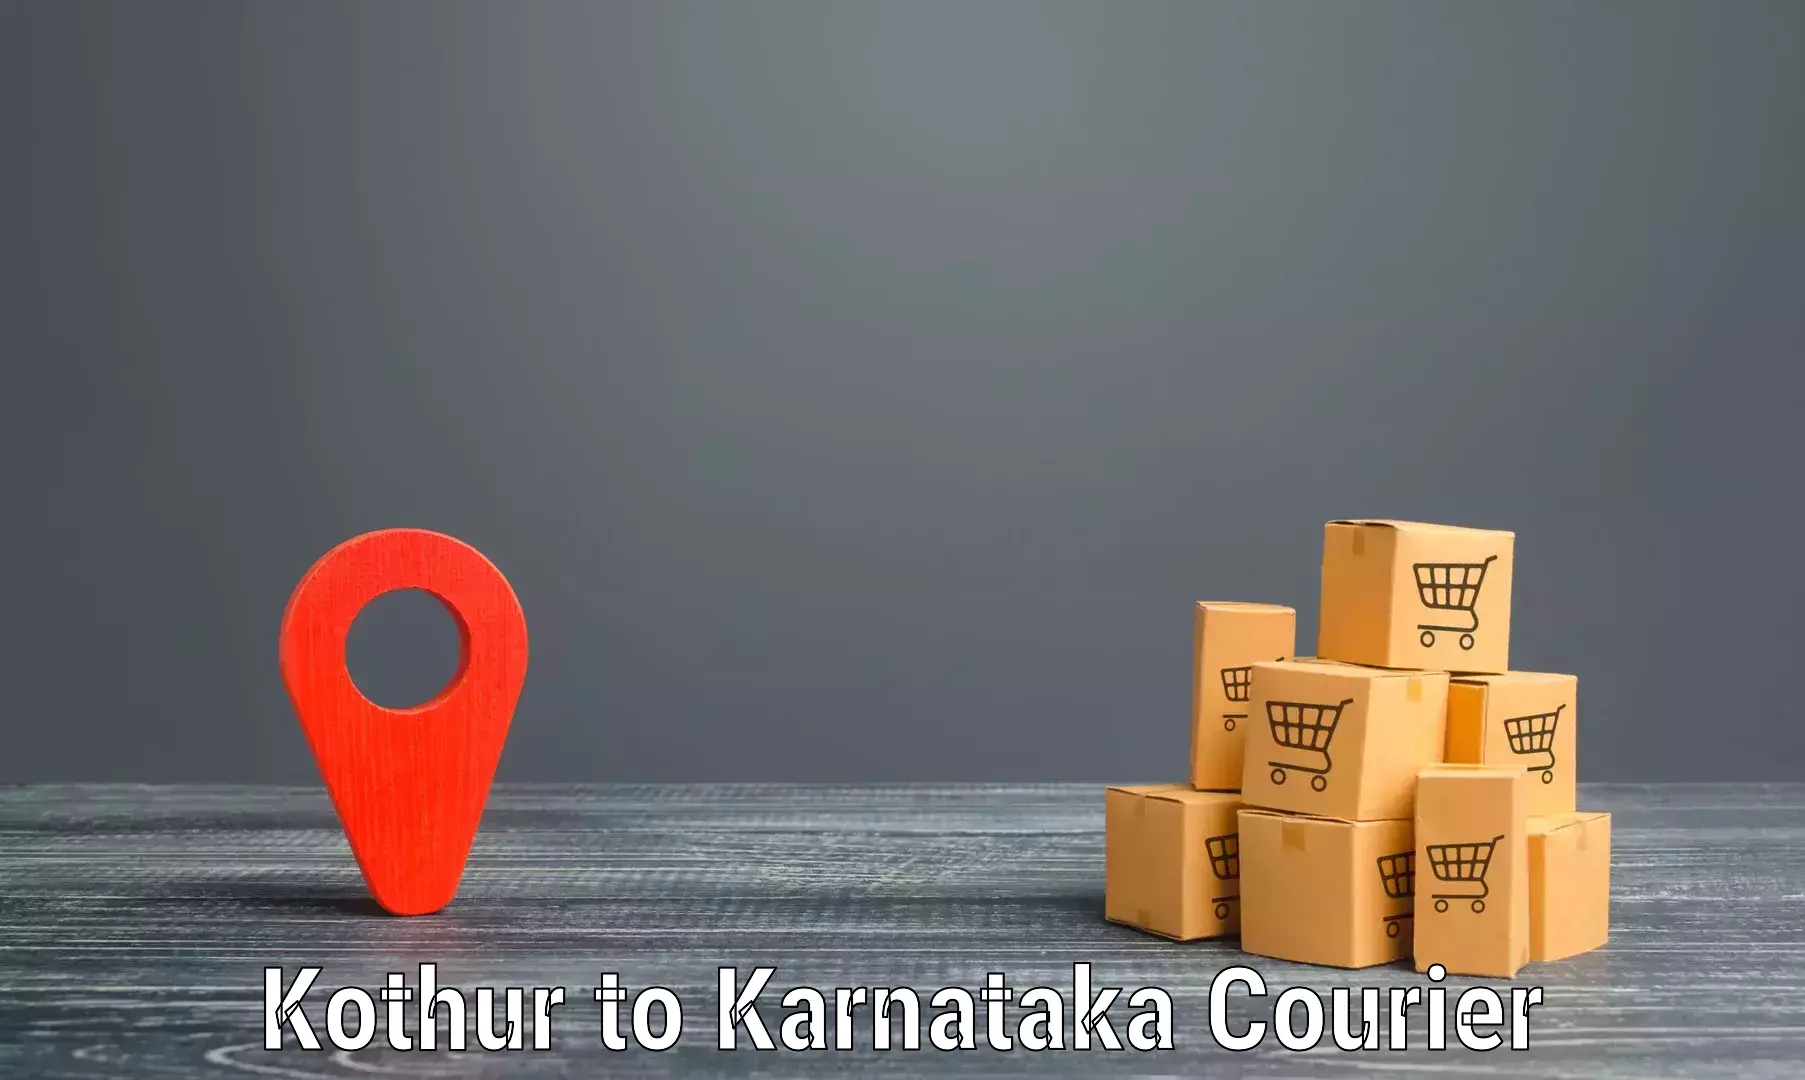 Reliable delivery network Kothur to Karnataka